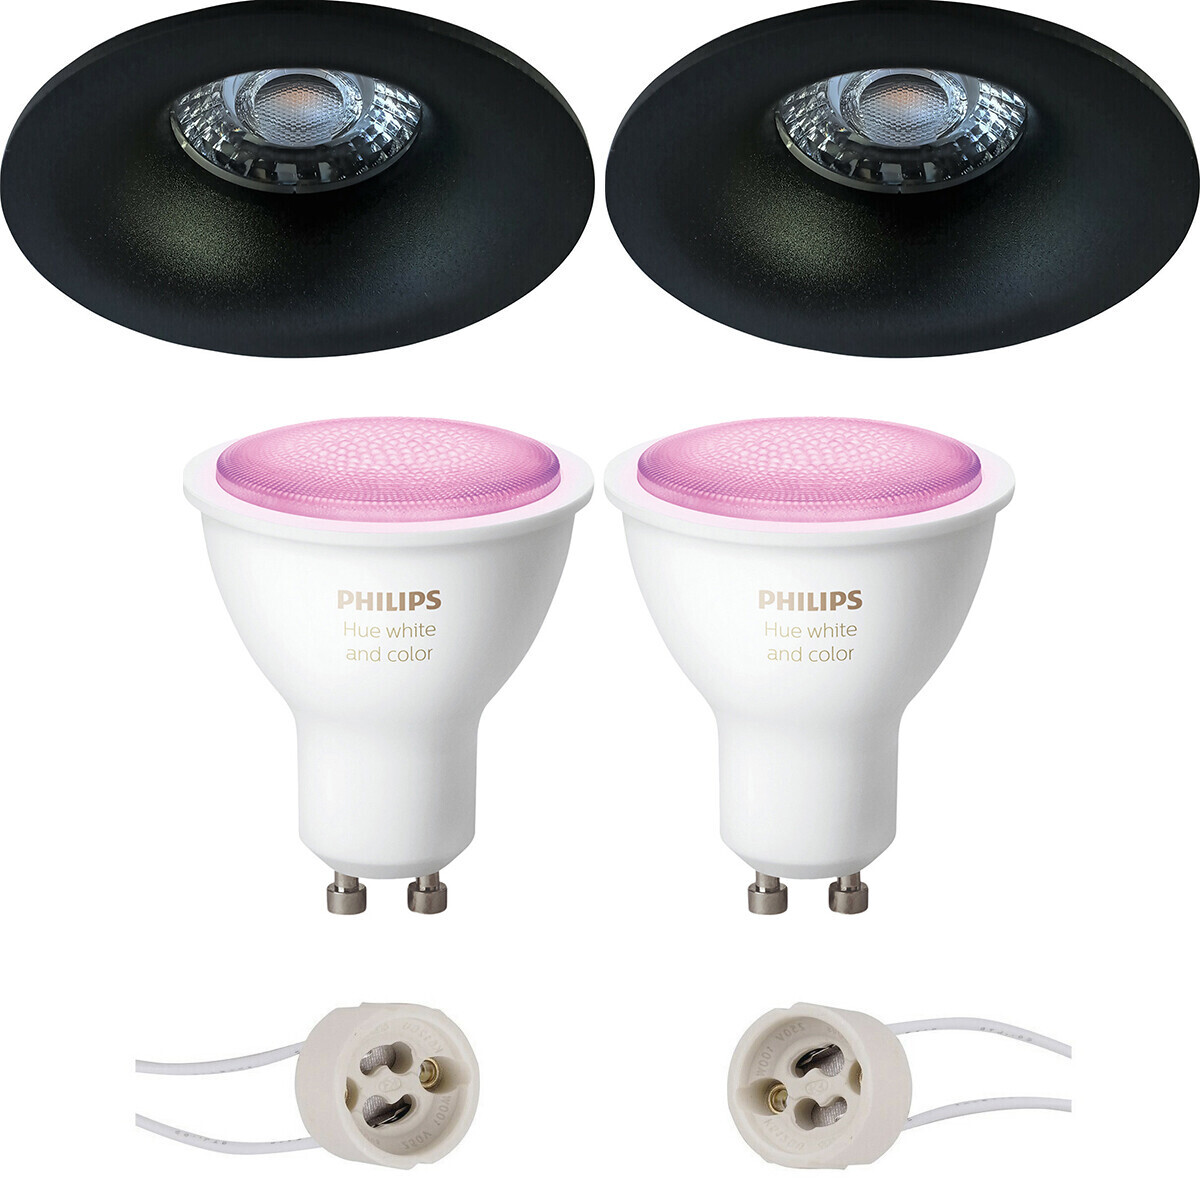 BES LED Pragmi Nora Pro - Inbouw Rond - Mat Zwart - Ø82mm - Philips Hue - LED Spot Set GU10 - White and Color Ambiance - Bluetooth